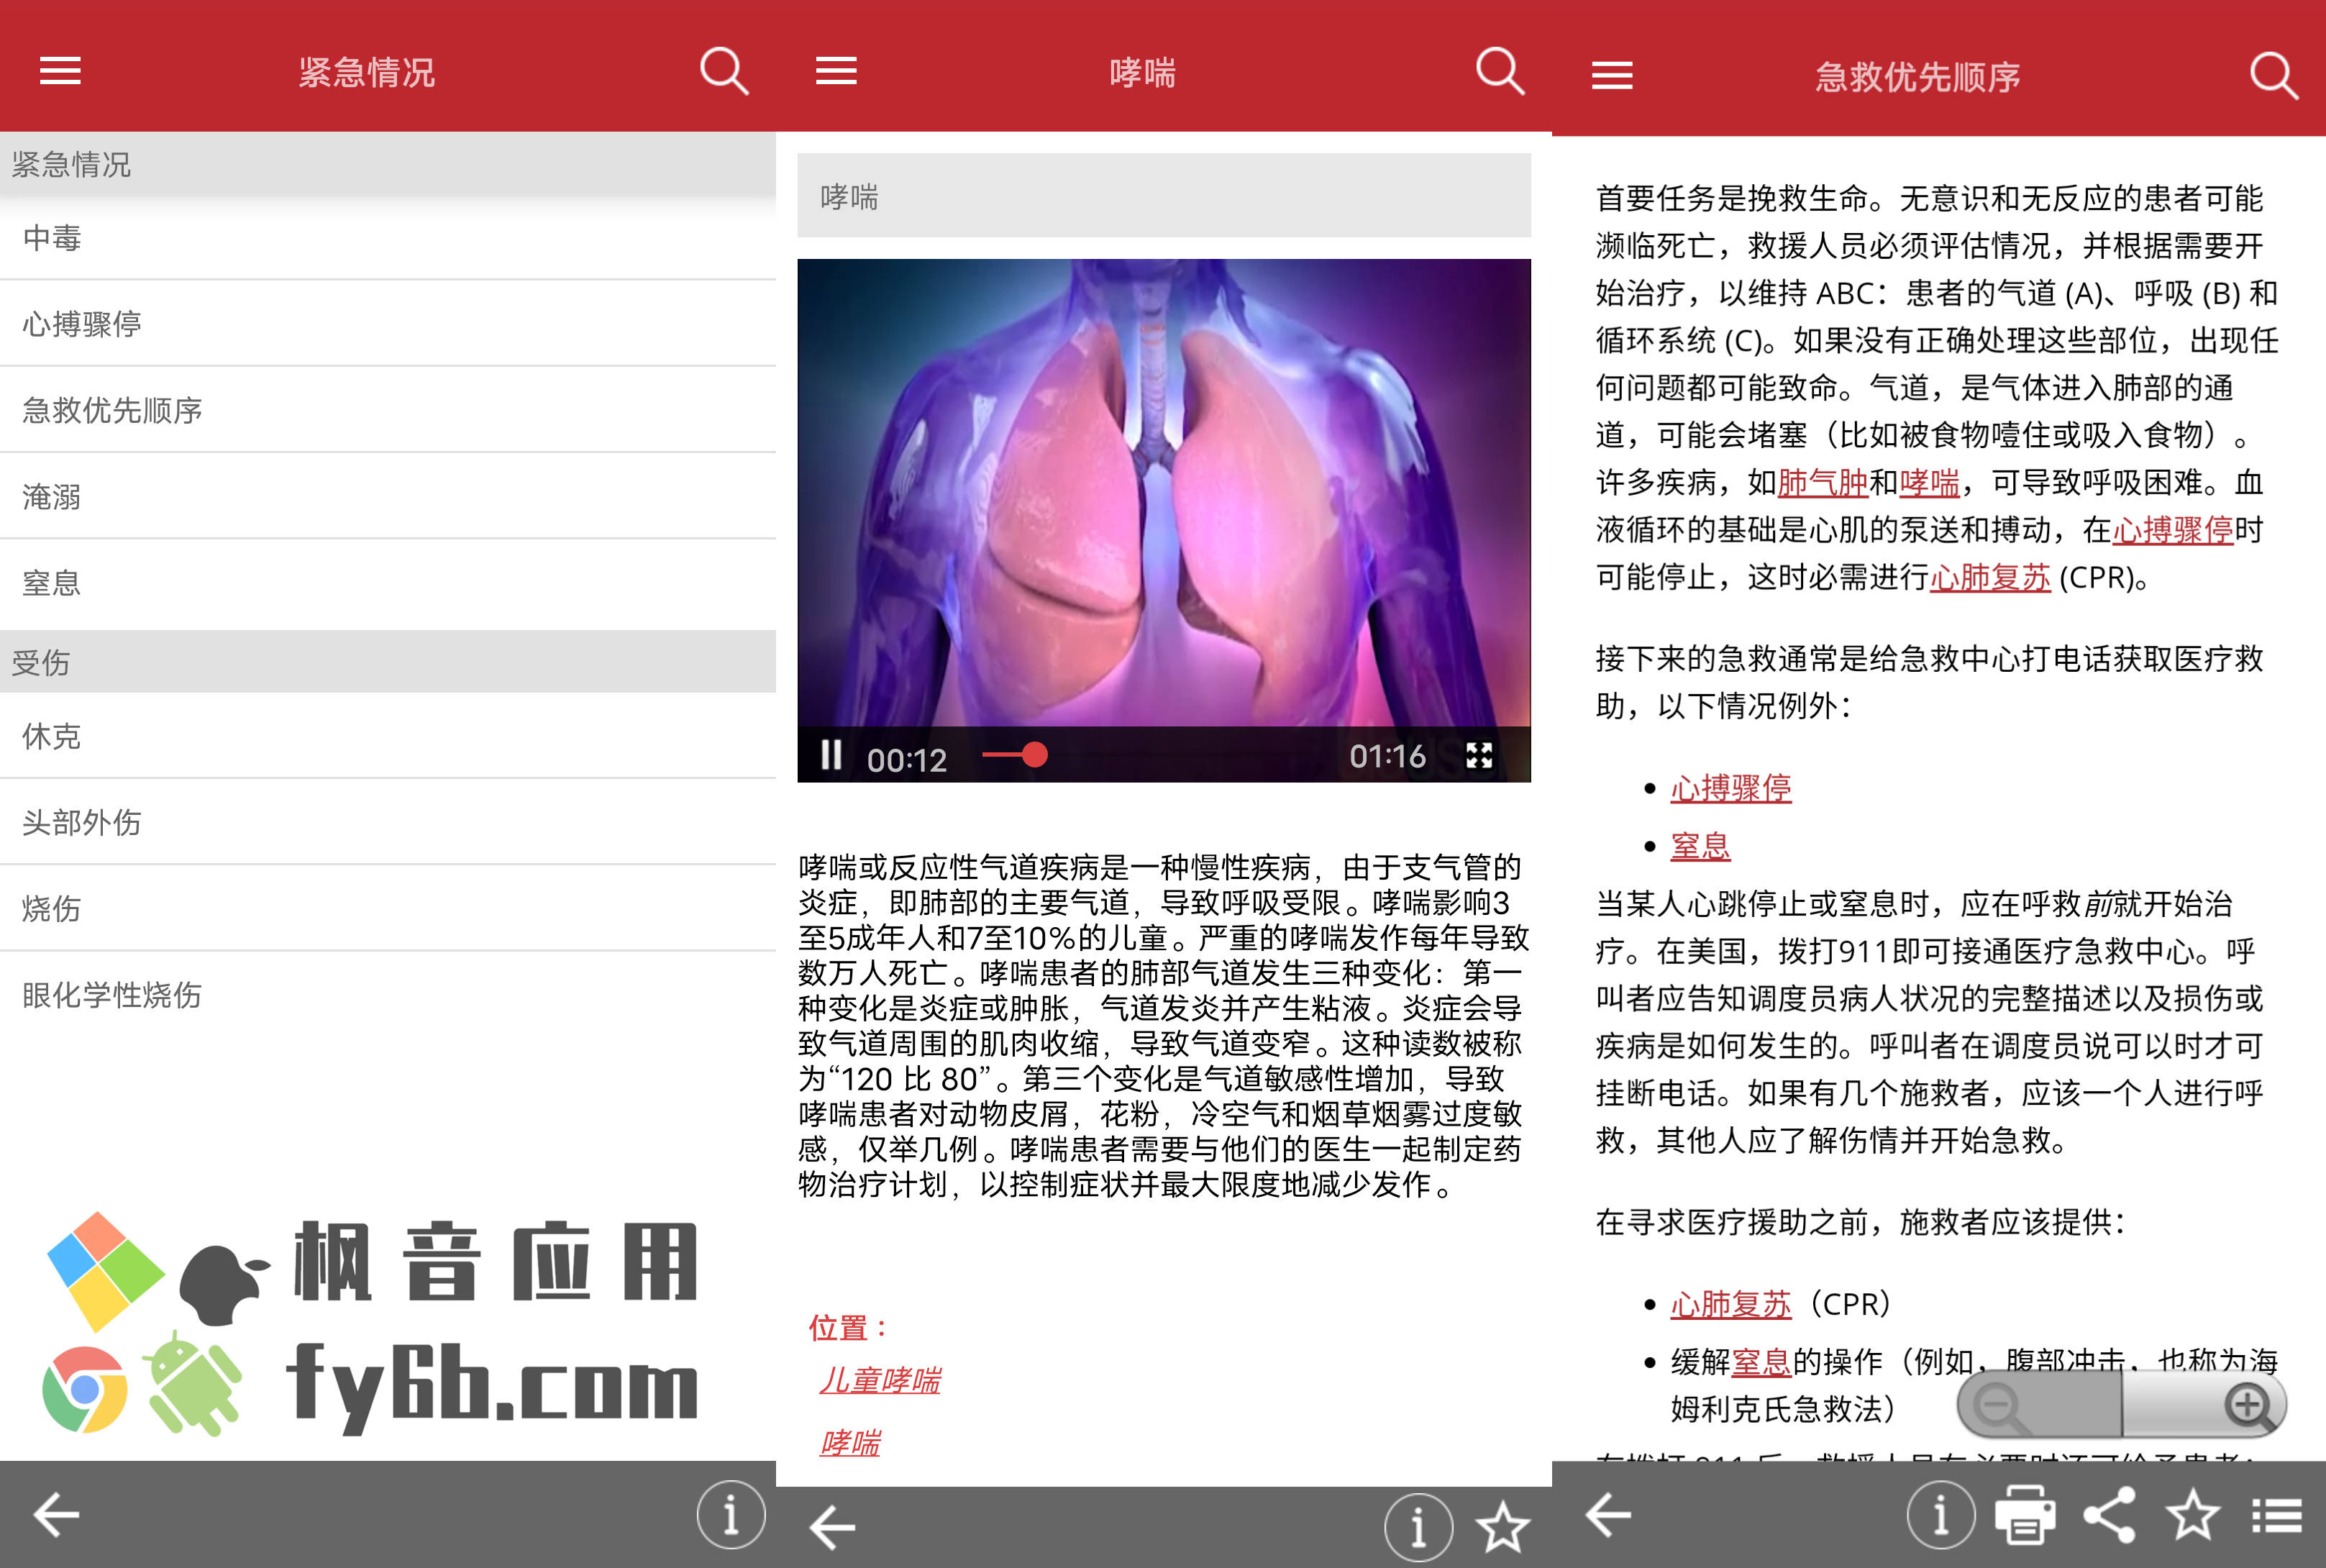 Android MSD Manual Home默沙东诊疗手册_1.8